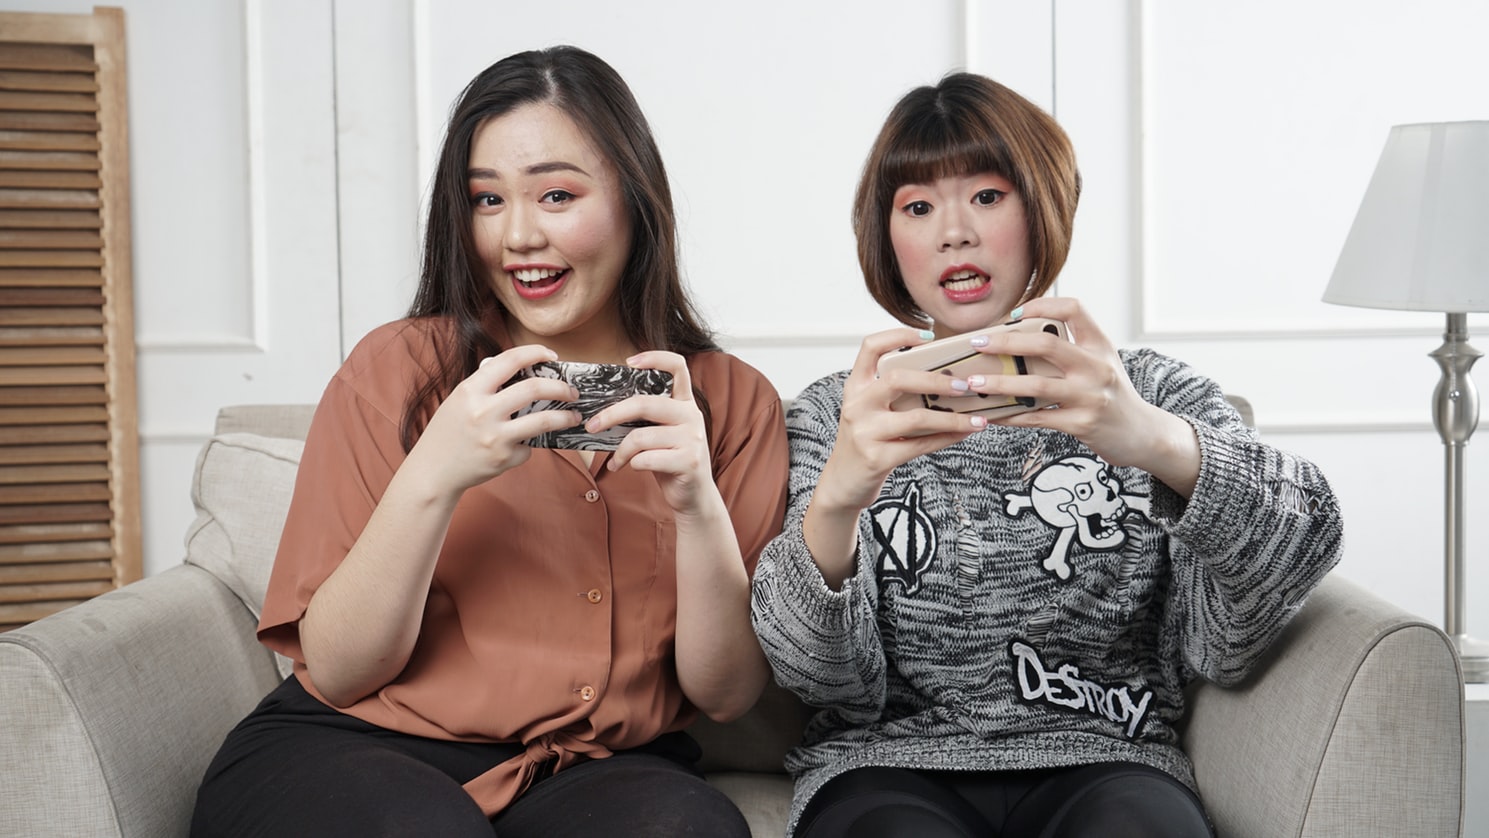 girls playing mobile games